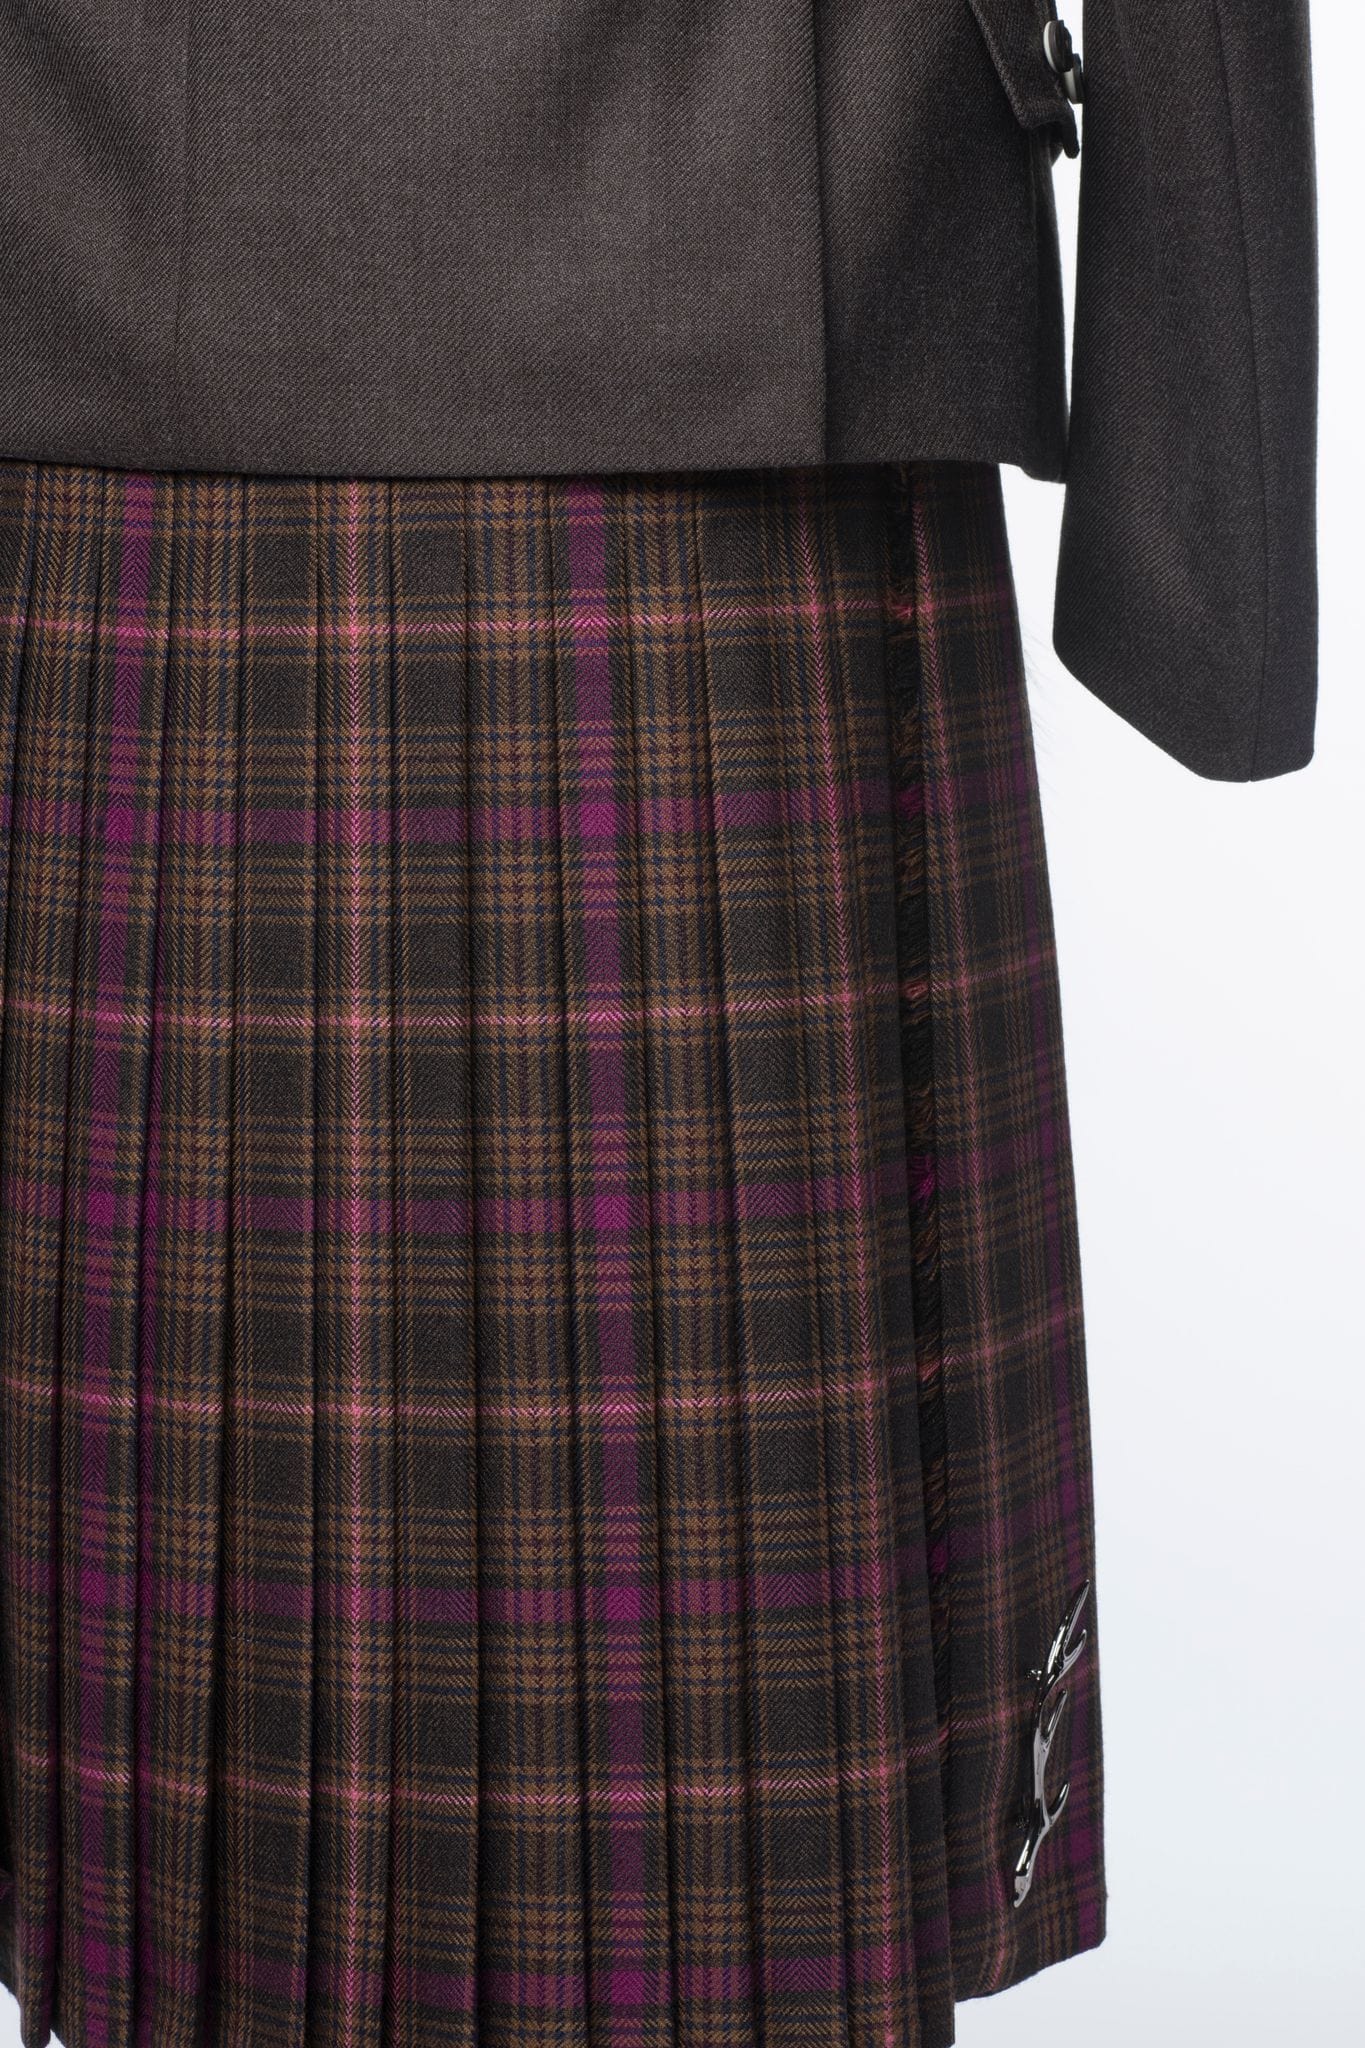 Brown Tweed Kilt Outfit - MacGregor and MacDuff